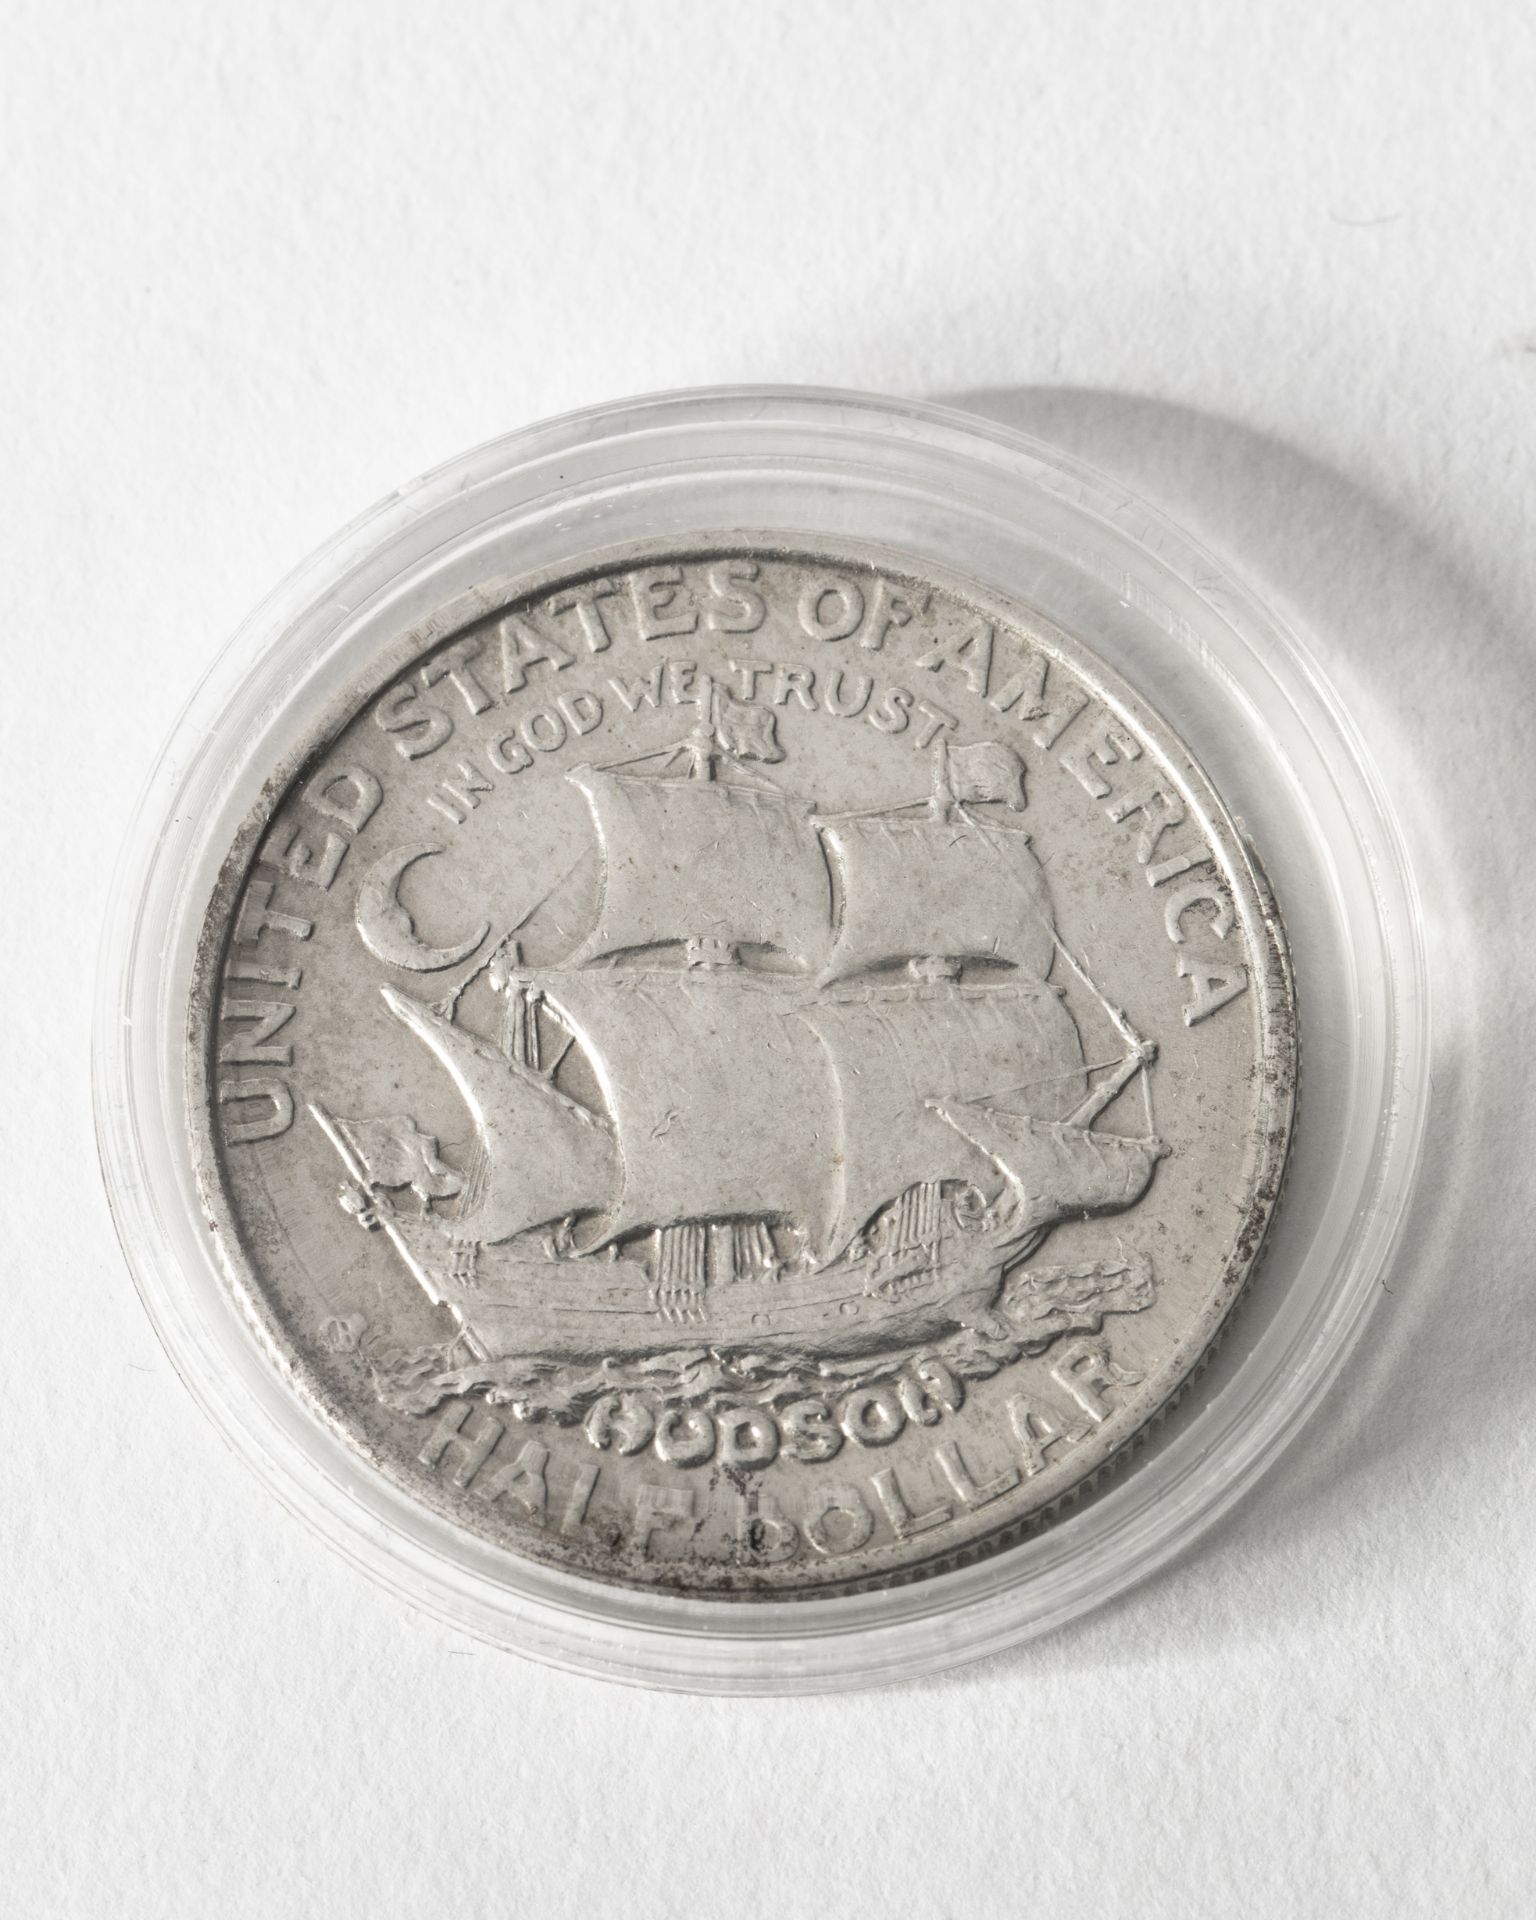 1/2 Dollar USA. 1935. City of Hudson N.Y. 1785-1935. - Image 2 of 2